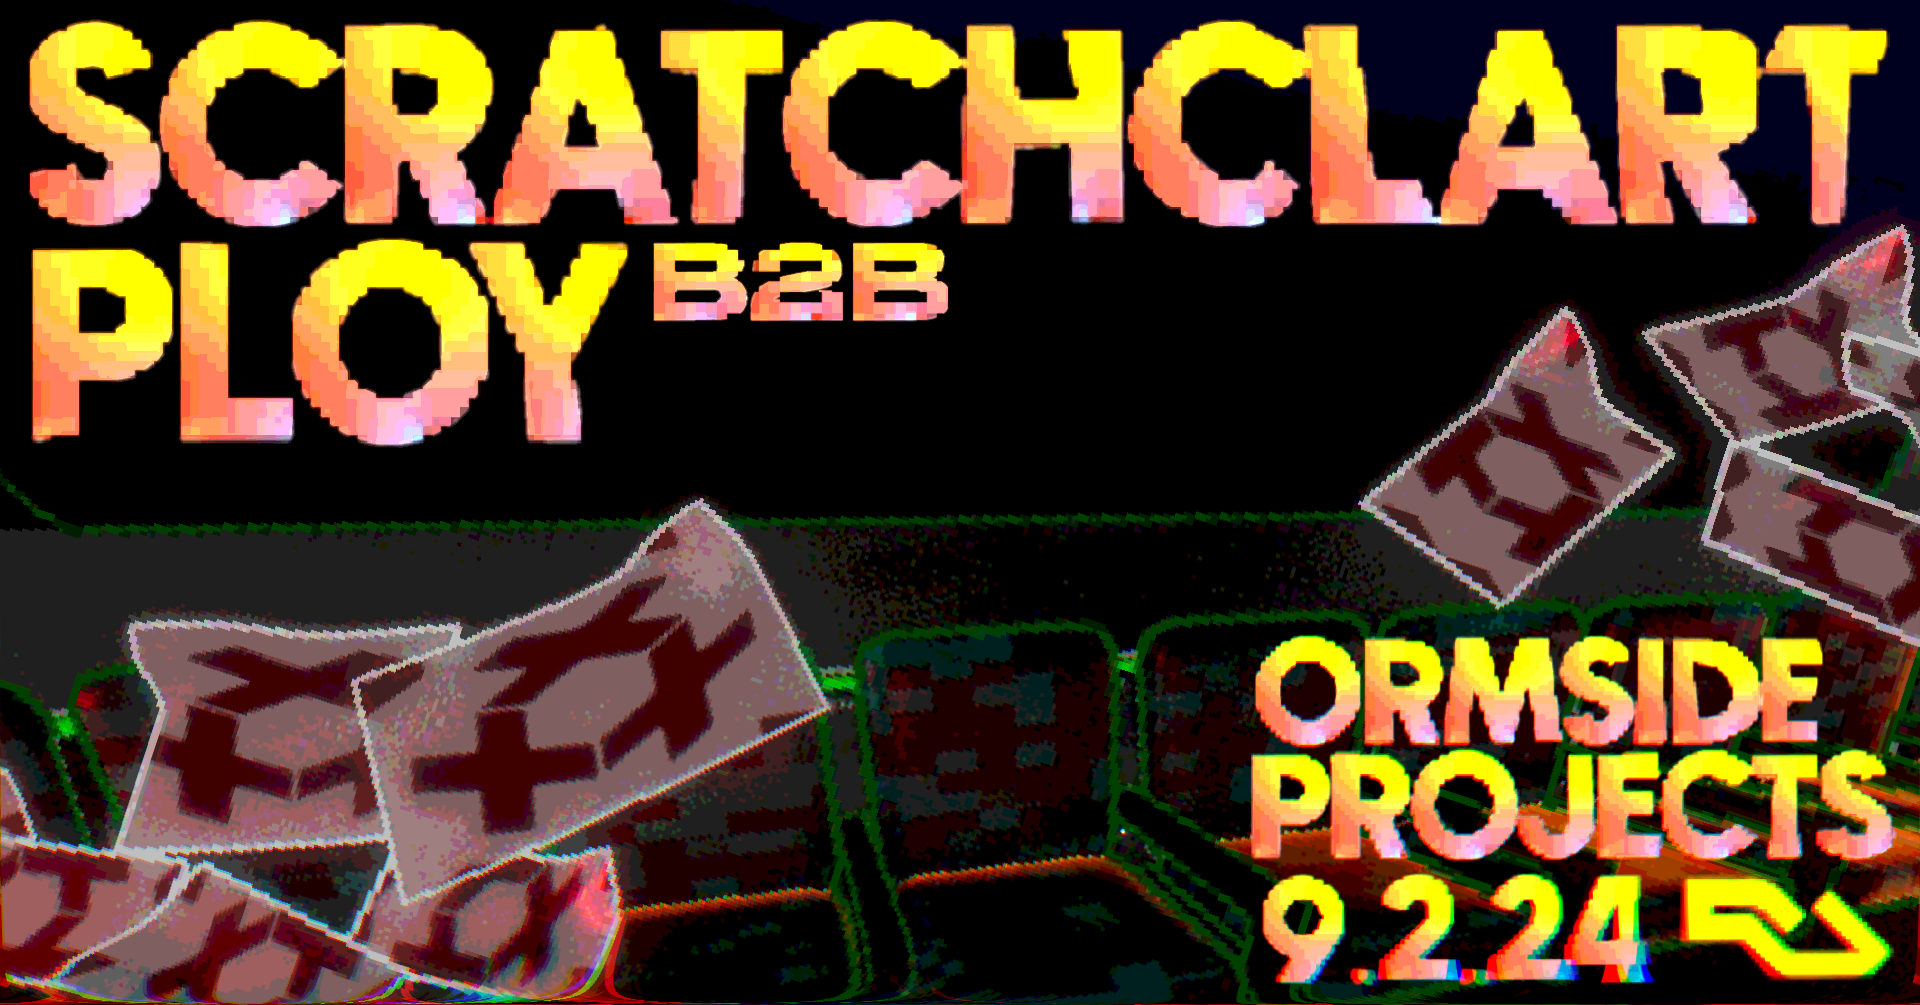 Materials: Scratchclart b2b Ploy - フライヤー表